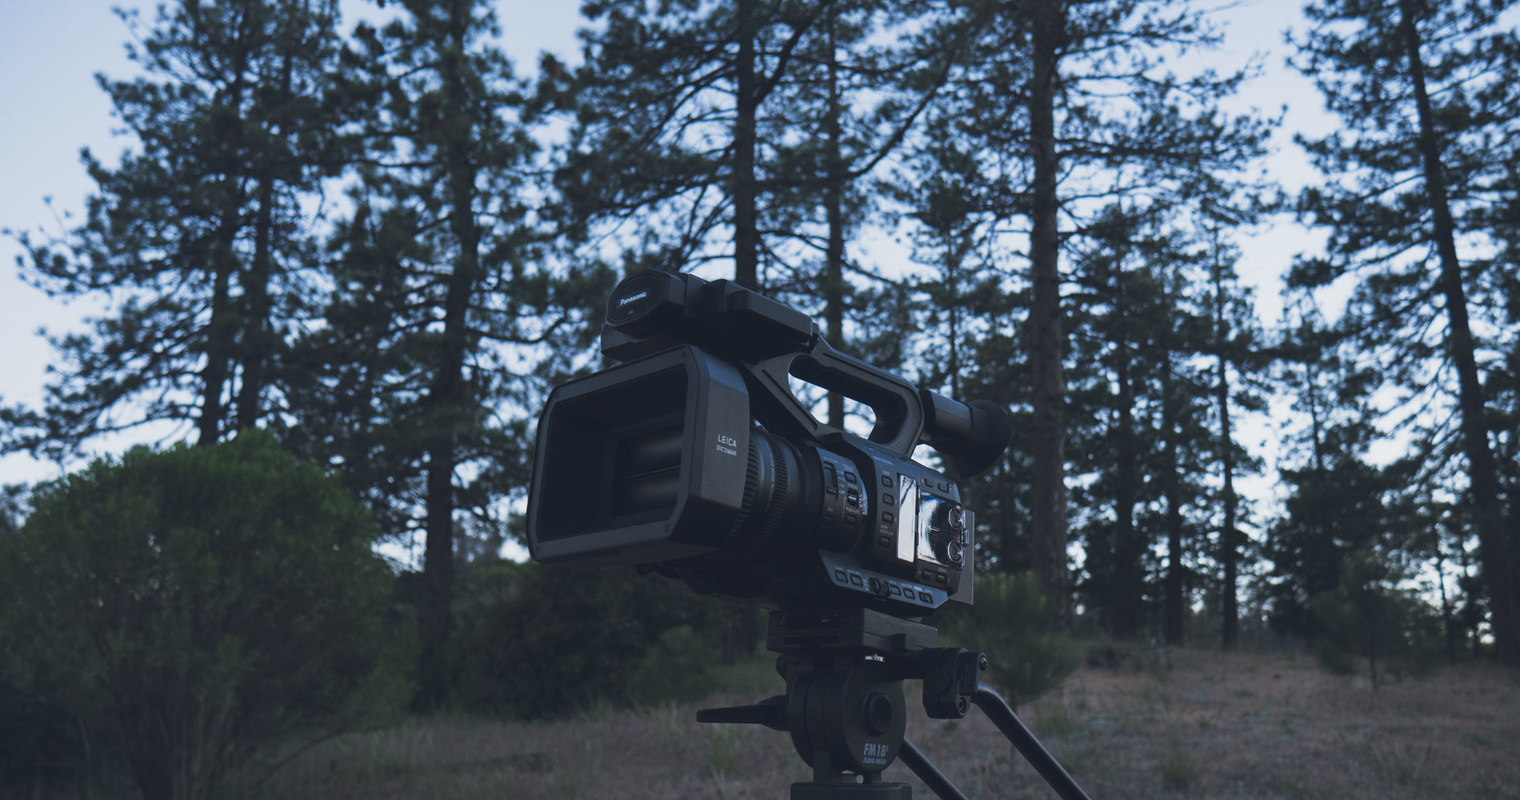 Video camera in forest scene